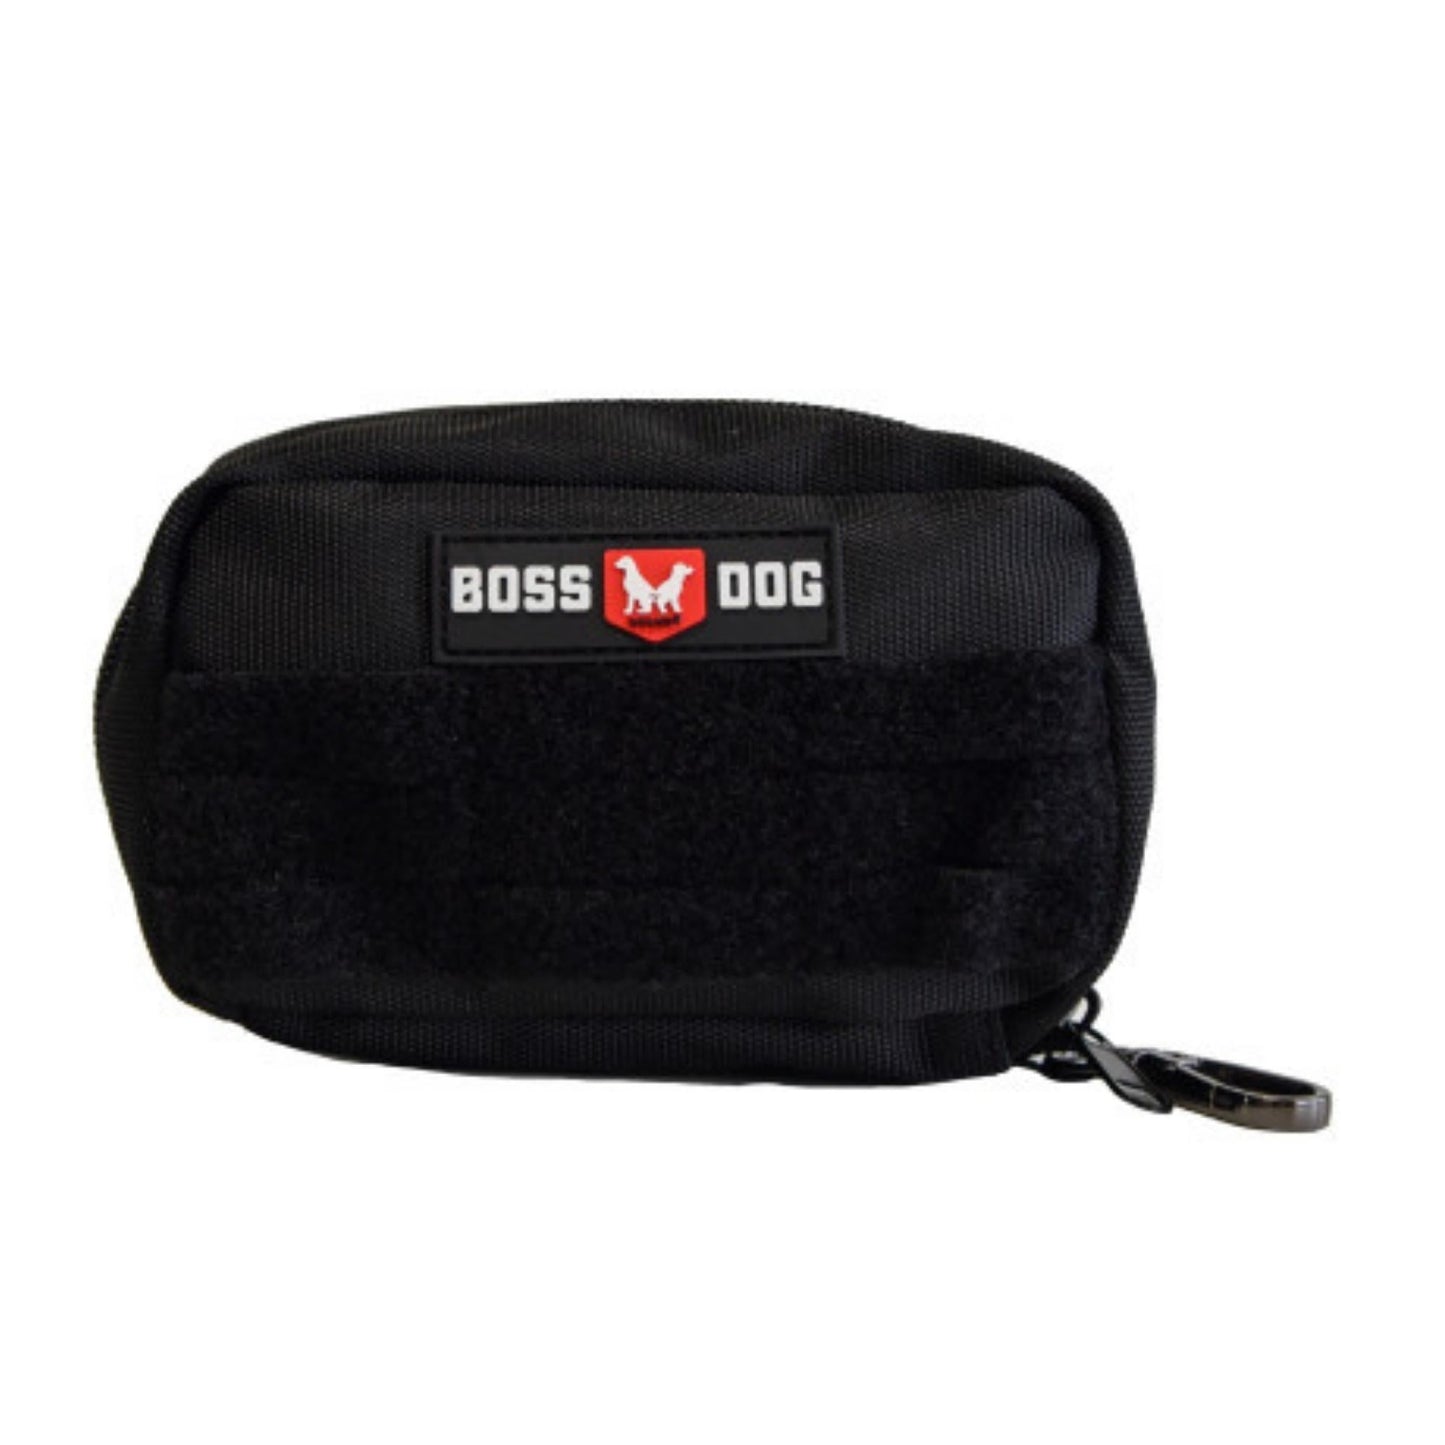 Boss Dog Tactical Molle Harness Bag Black, 1ea/Small